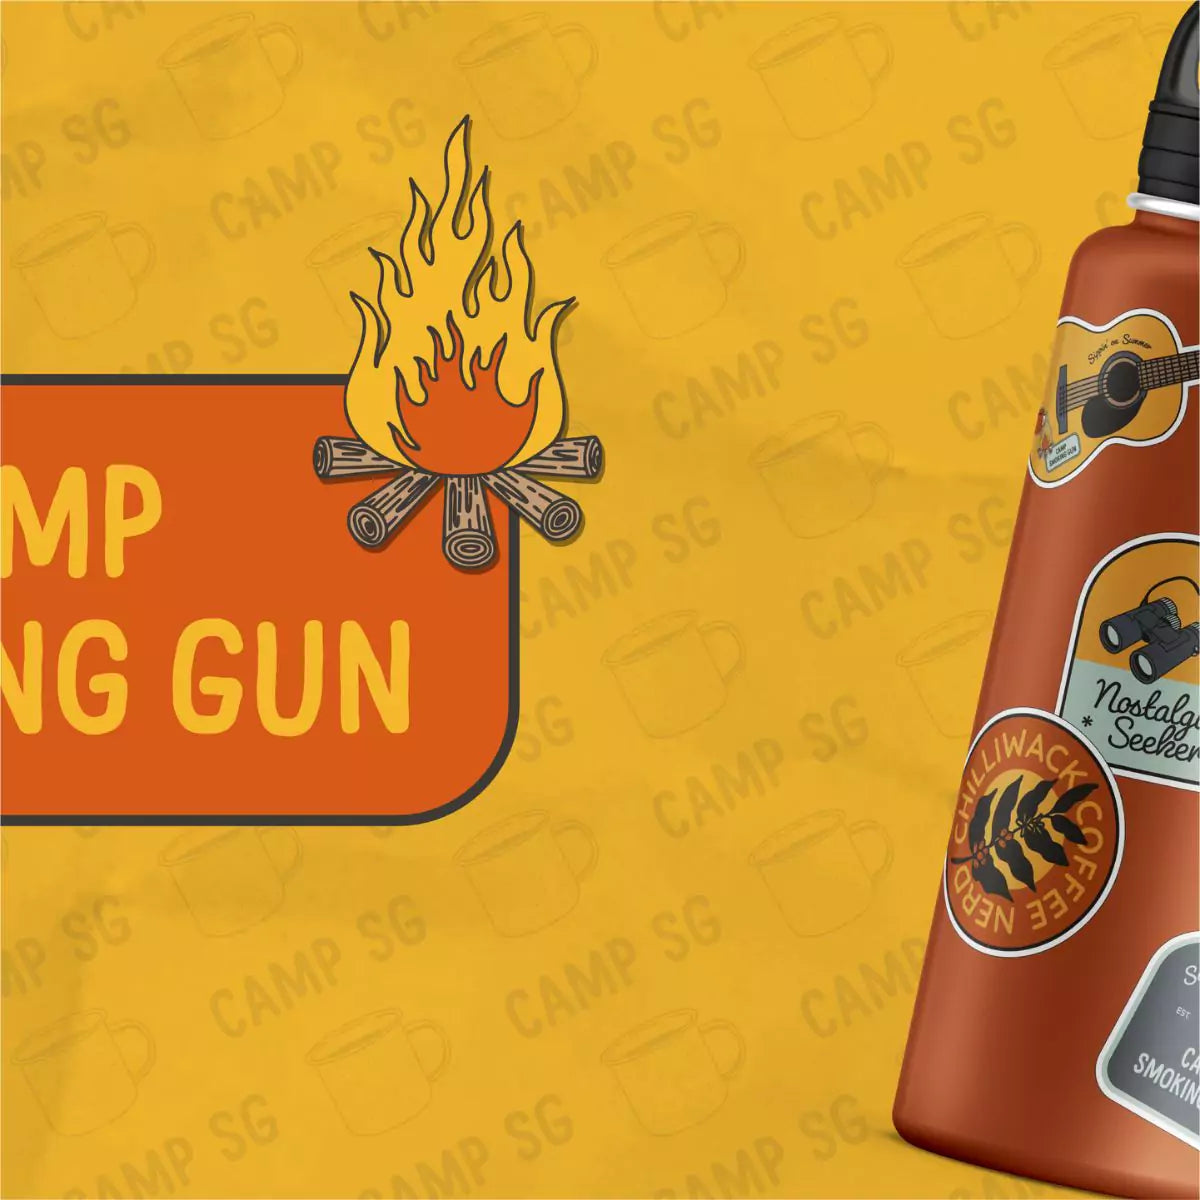 Camp Smoking Gun | Limited Edition Roast Pack